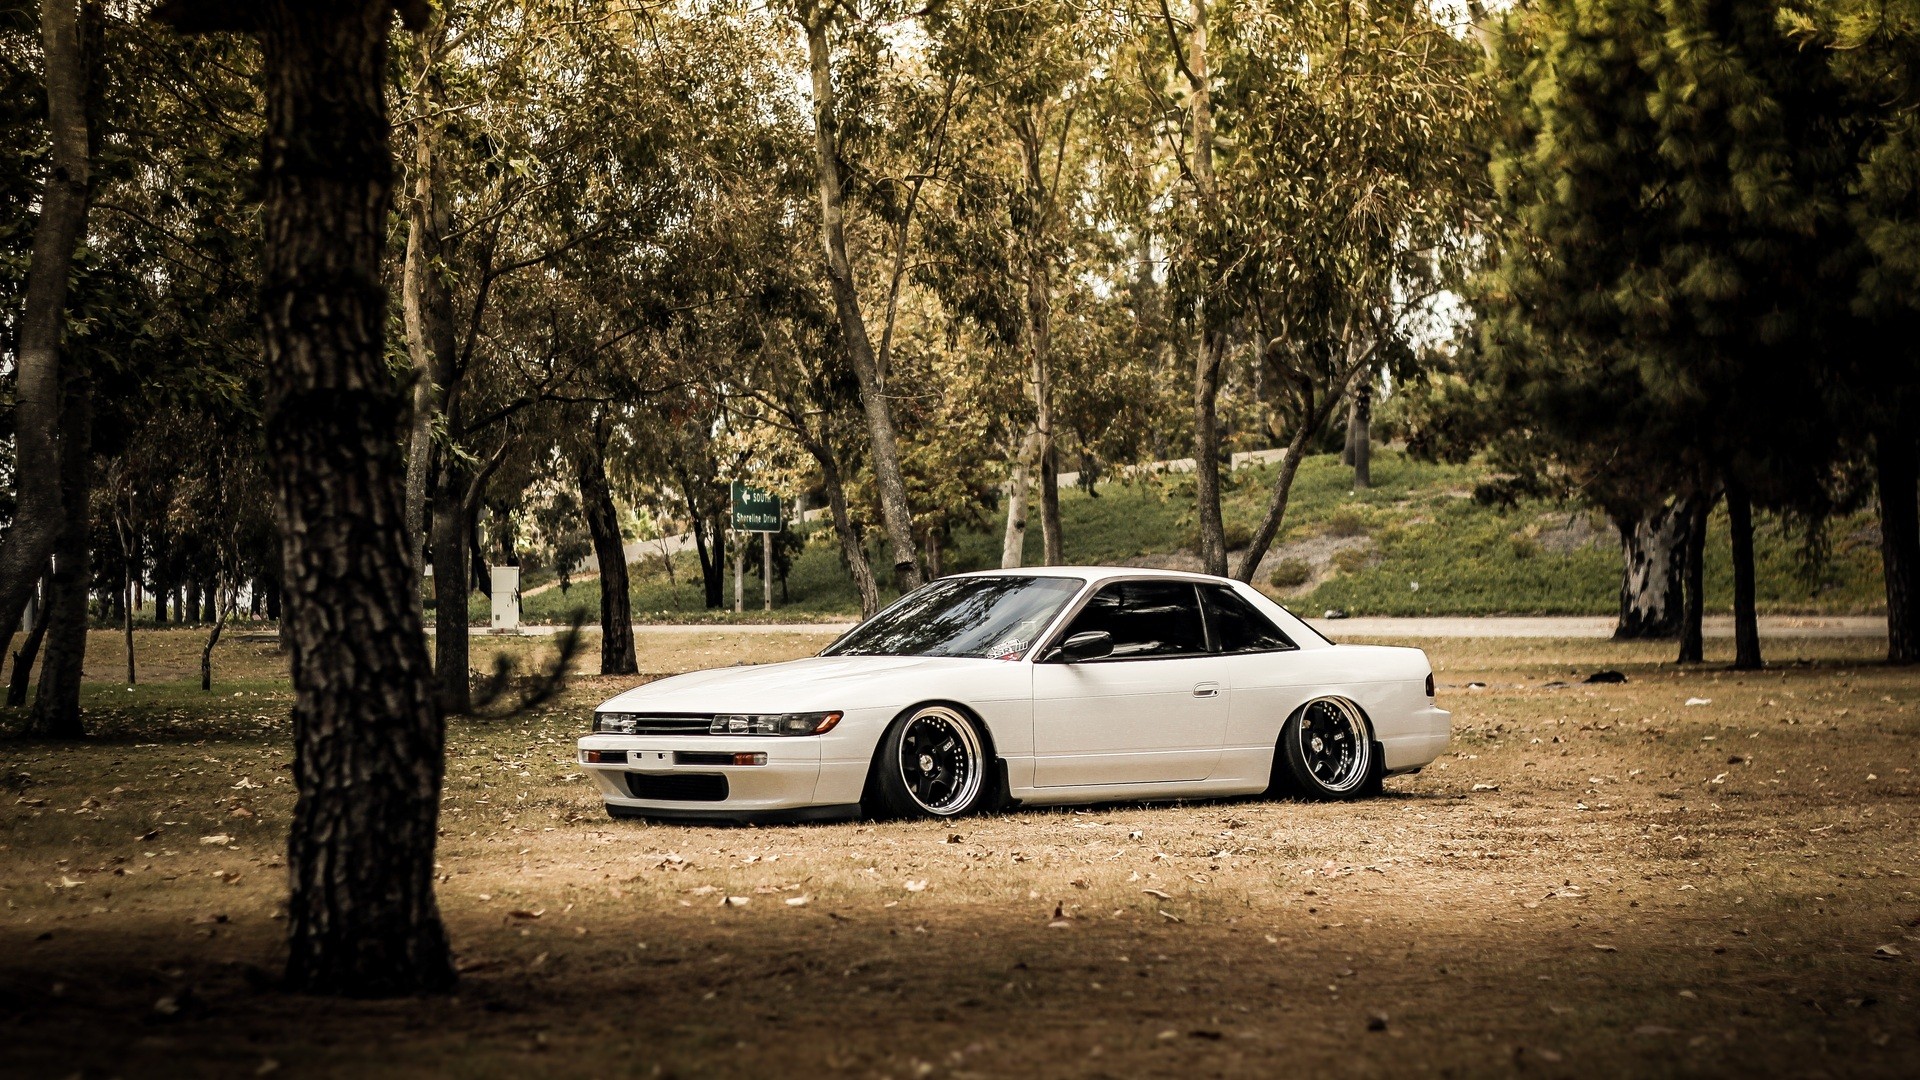 Silvia S13 Stance Jdm Wallpaper